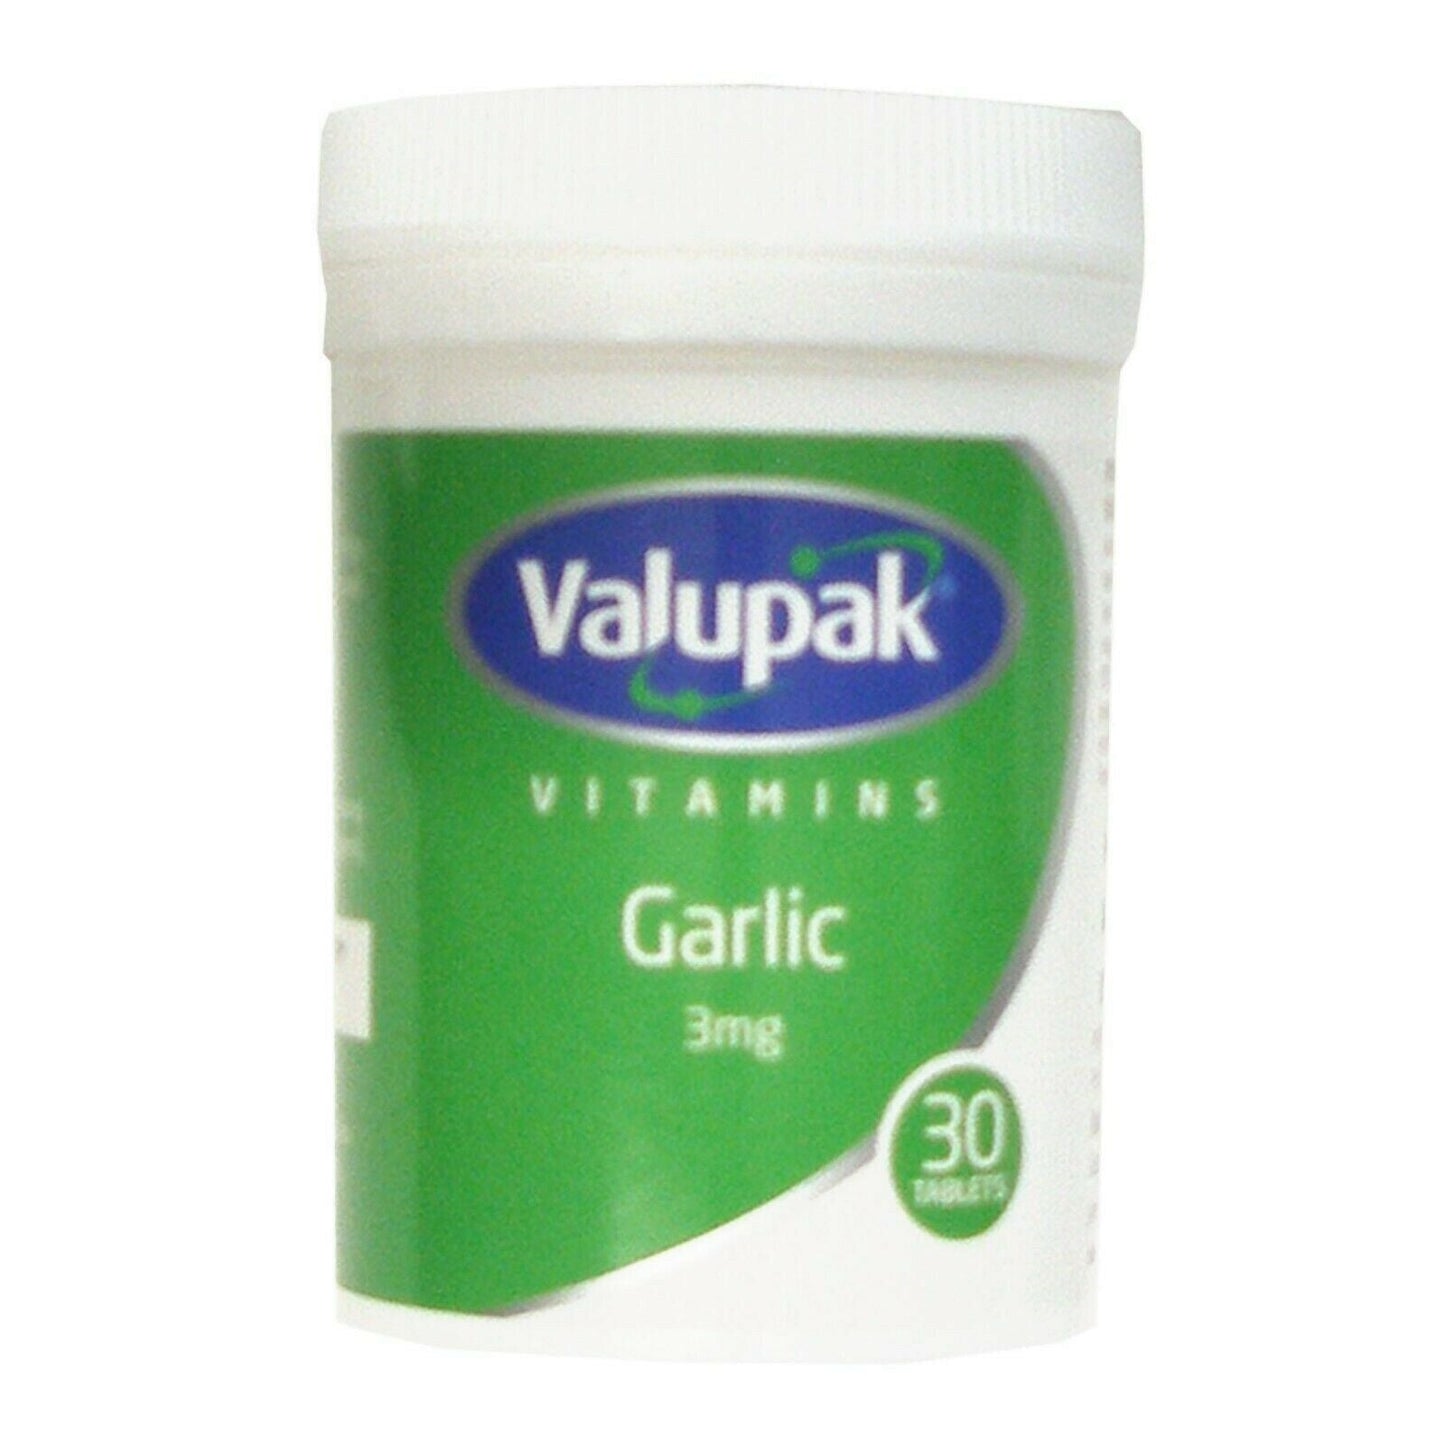 Valupak Garlic 3mg - 6 x 30 Tablets